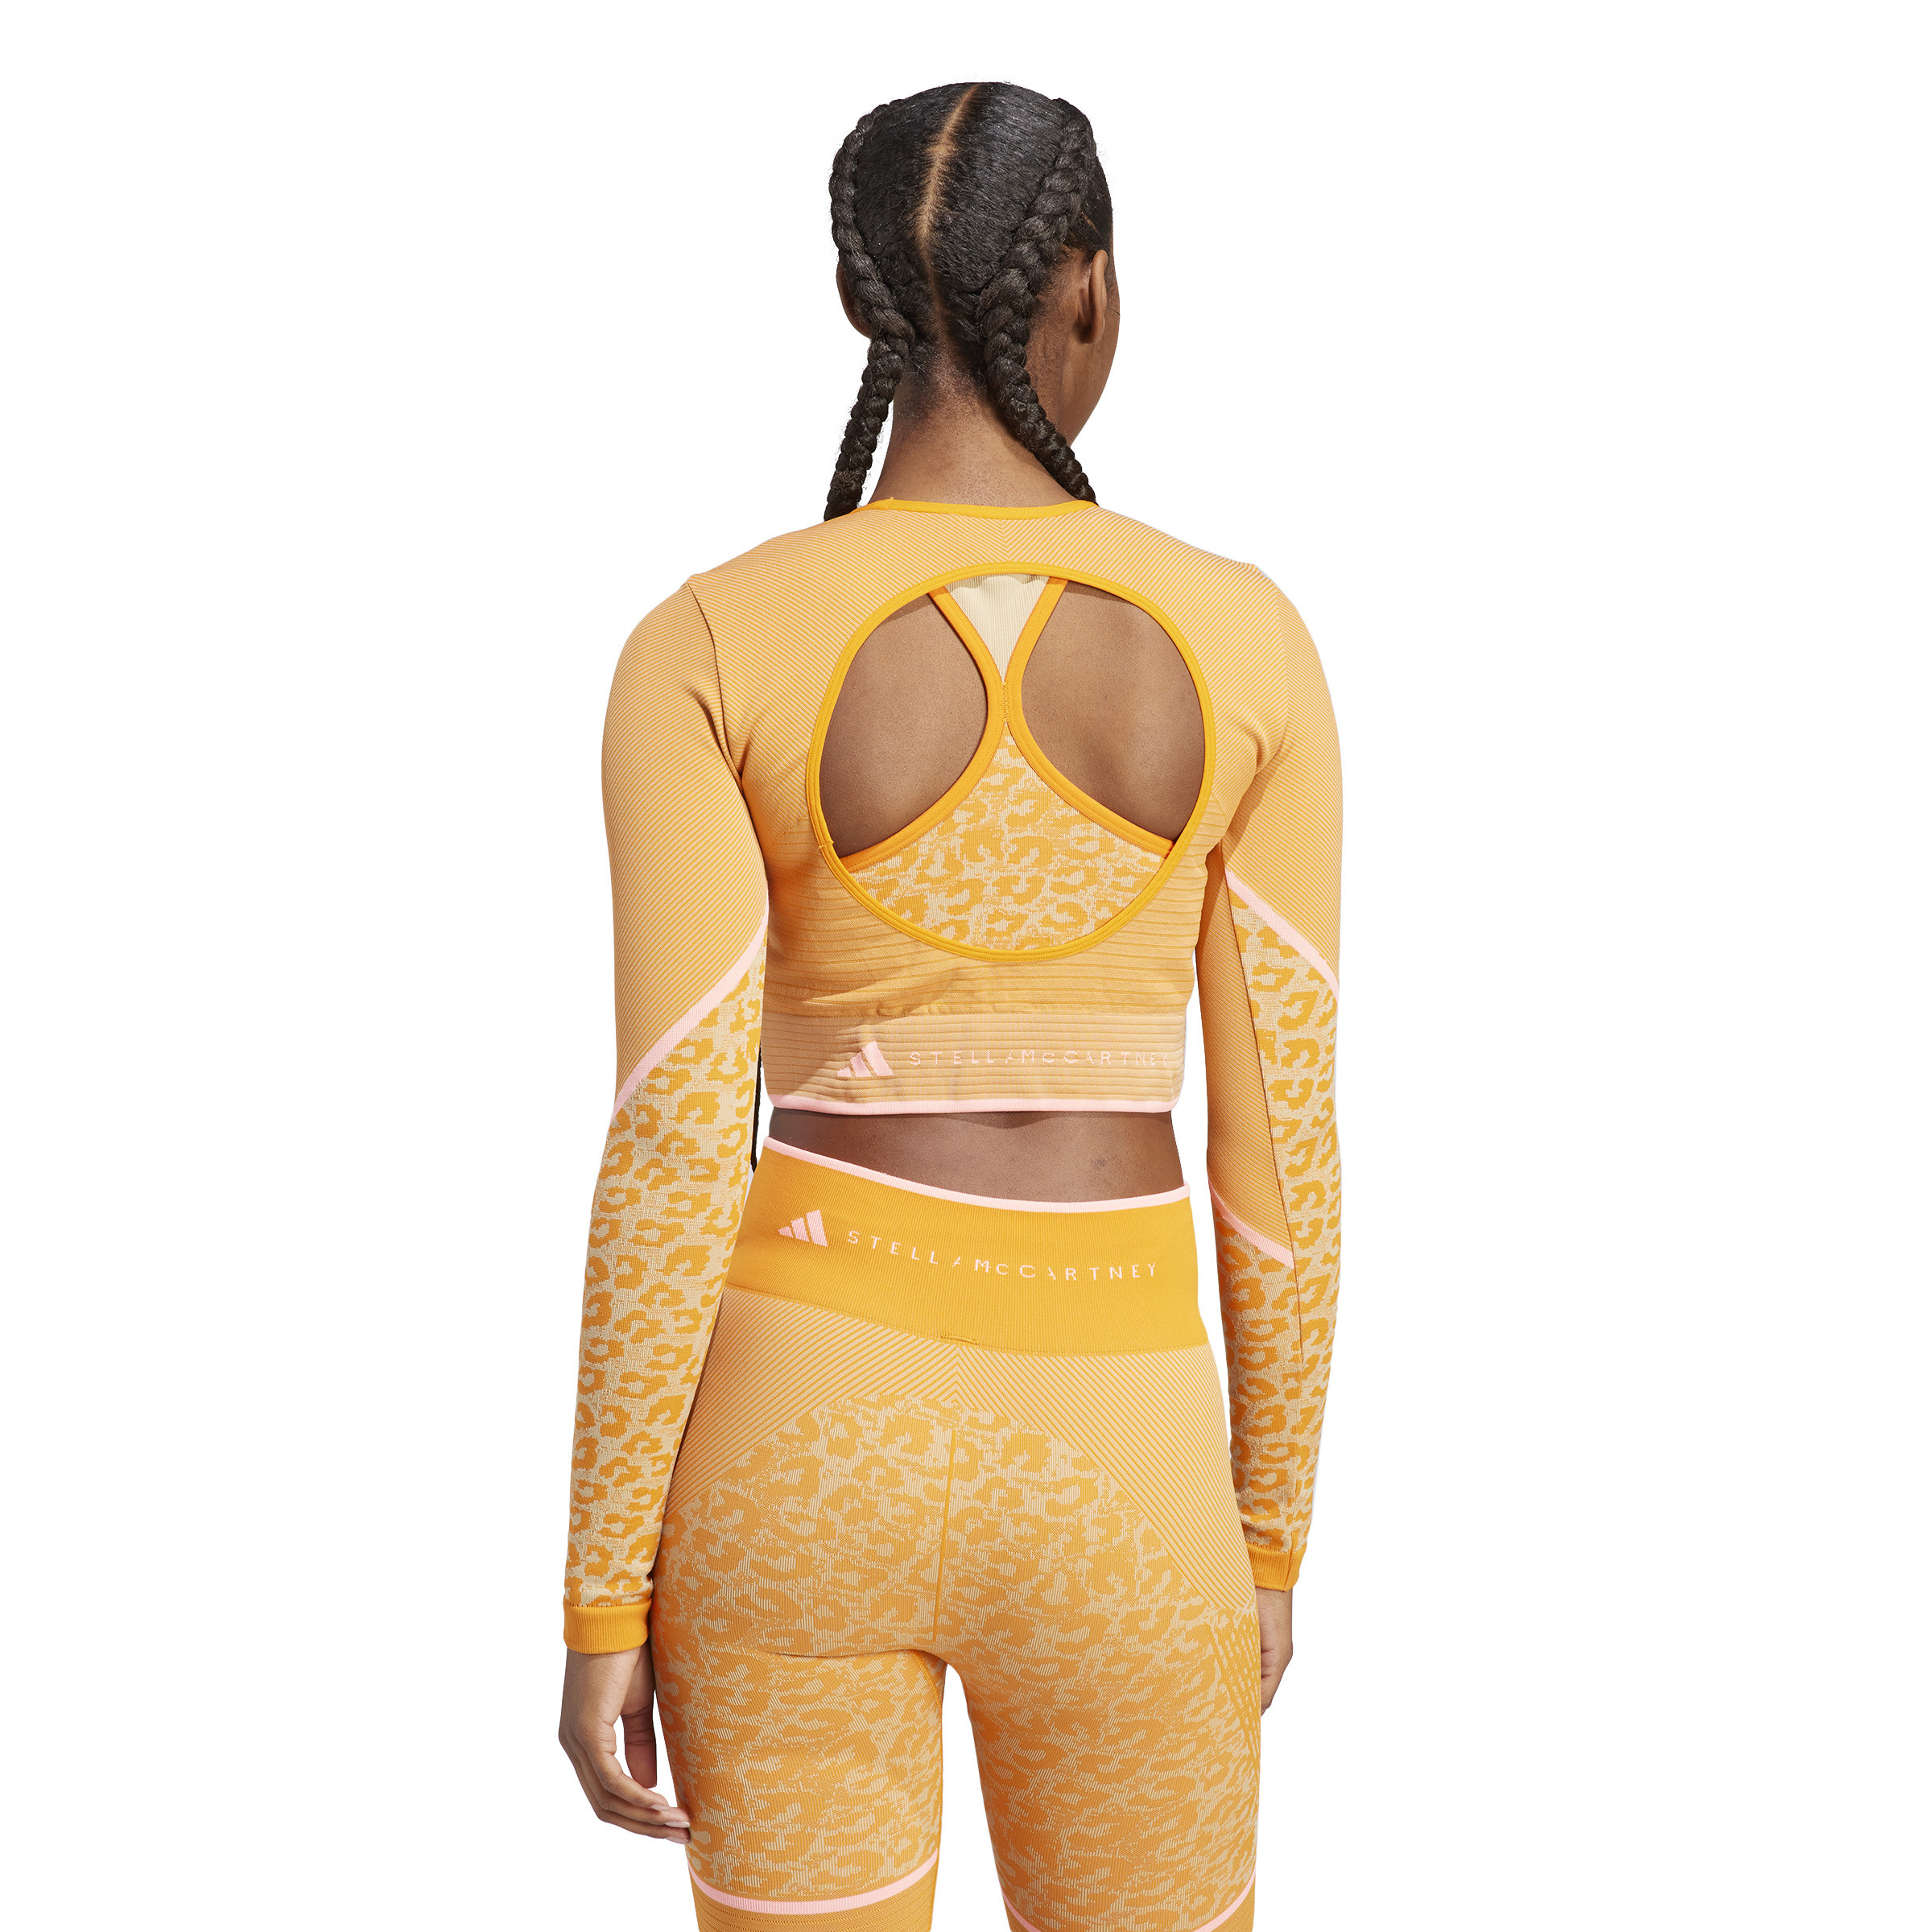 Adidas by Stella McCartney - TrueStrength Seamless Long Sleeve Yoga Top, Orange, large image number 5